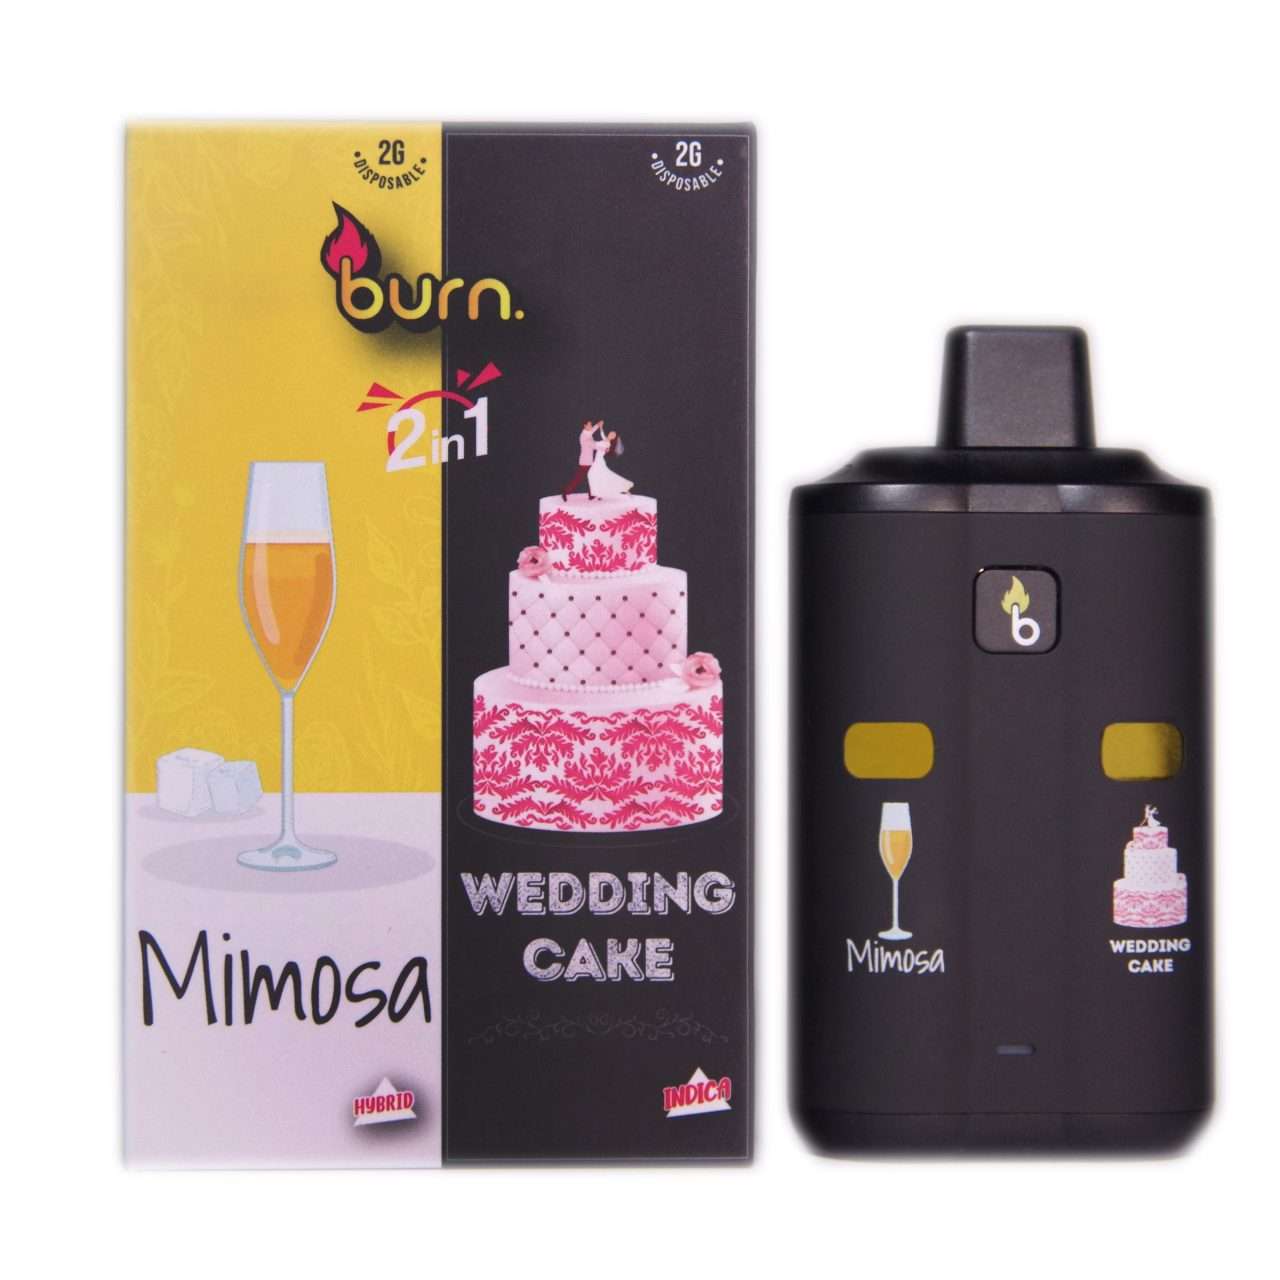 Burn 2 in 1 - 4G - Mimosa/Wedding Cake